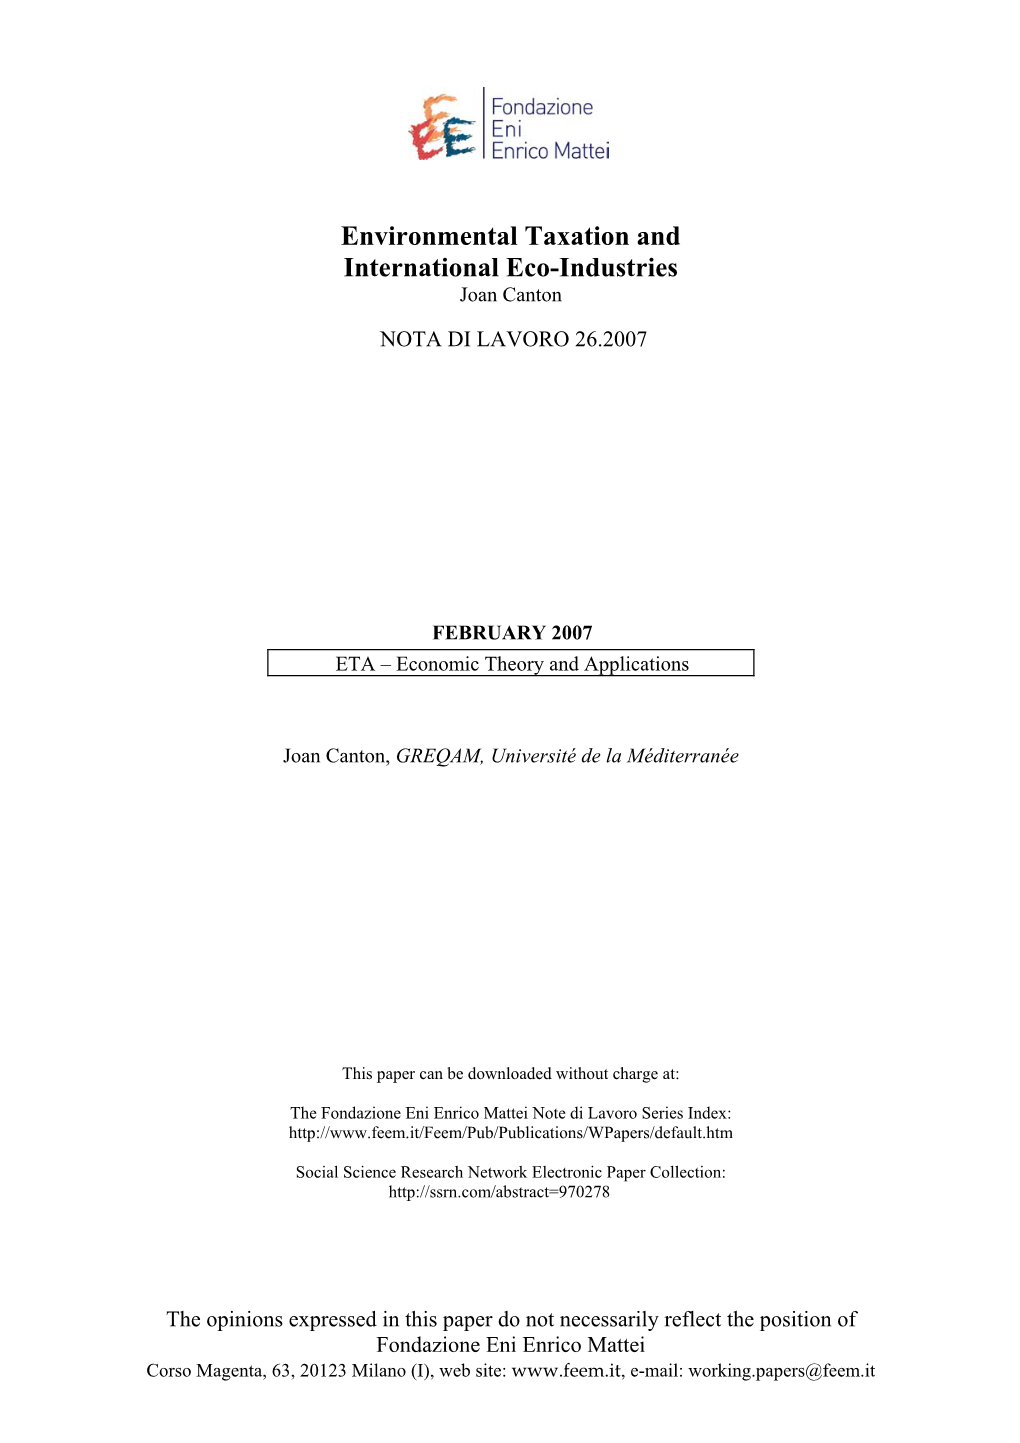 Environmental Taxation and International Eco-Industries Joan Canton